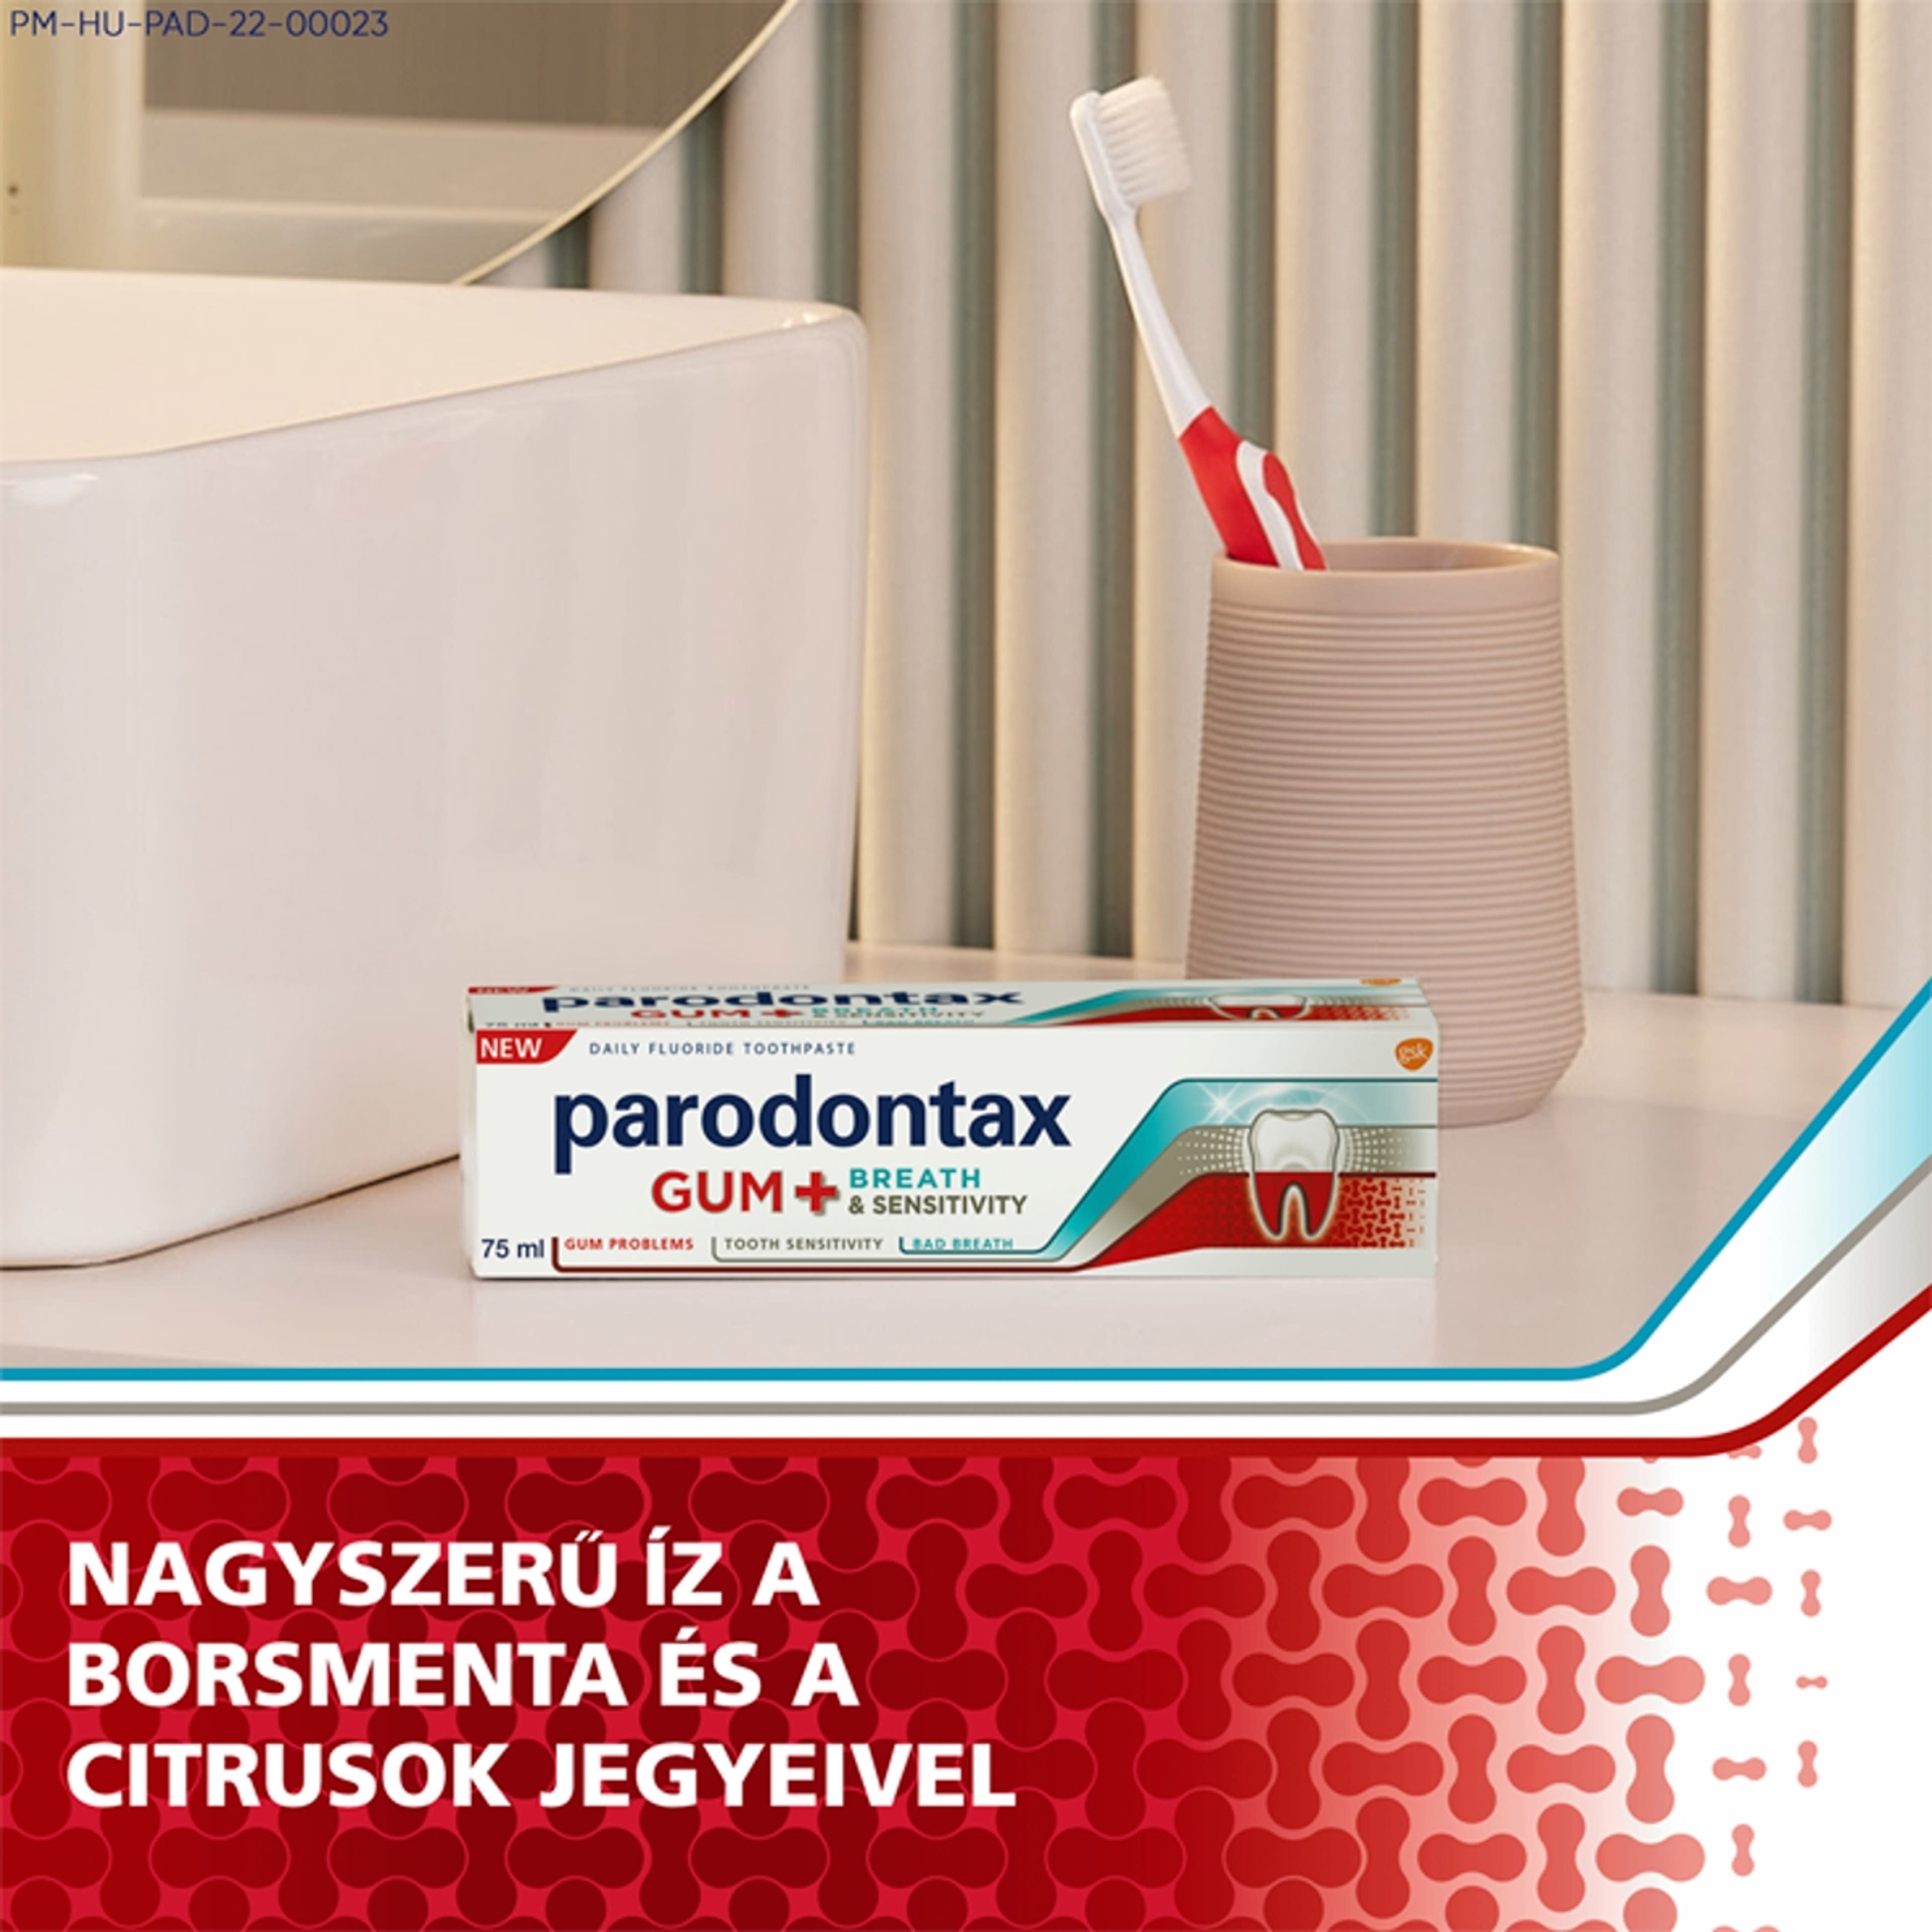 Parodontax Gum + Breath & Sensitivity fluoridos fogkrém - 75 ml-7